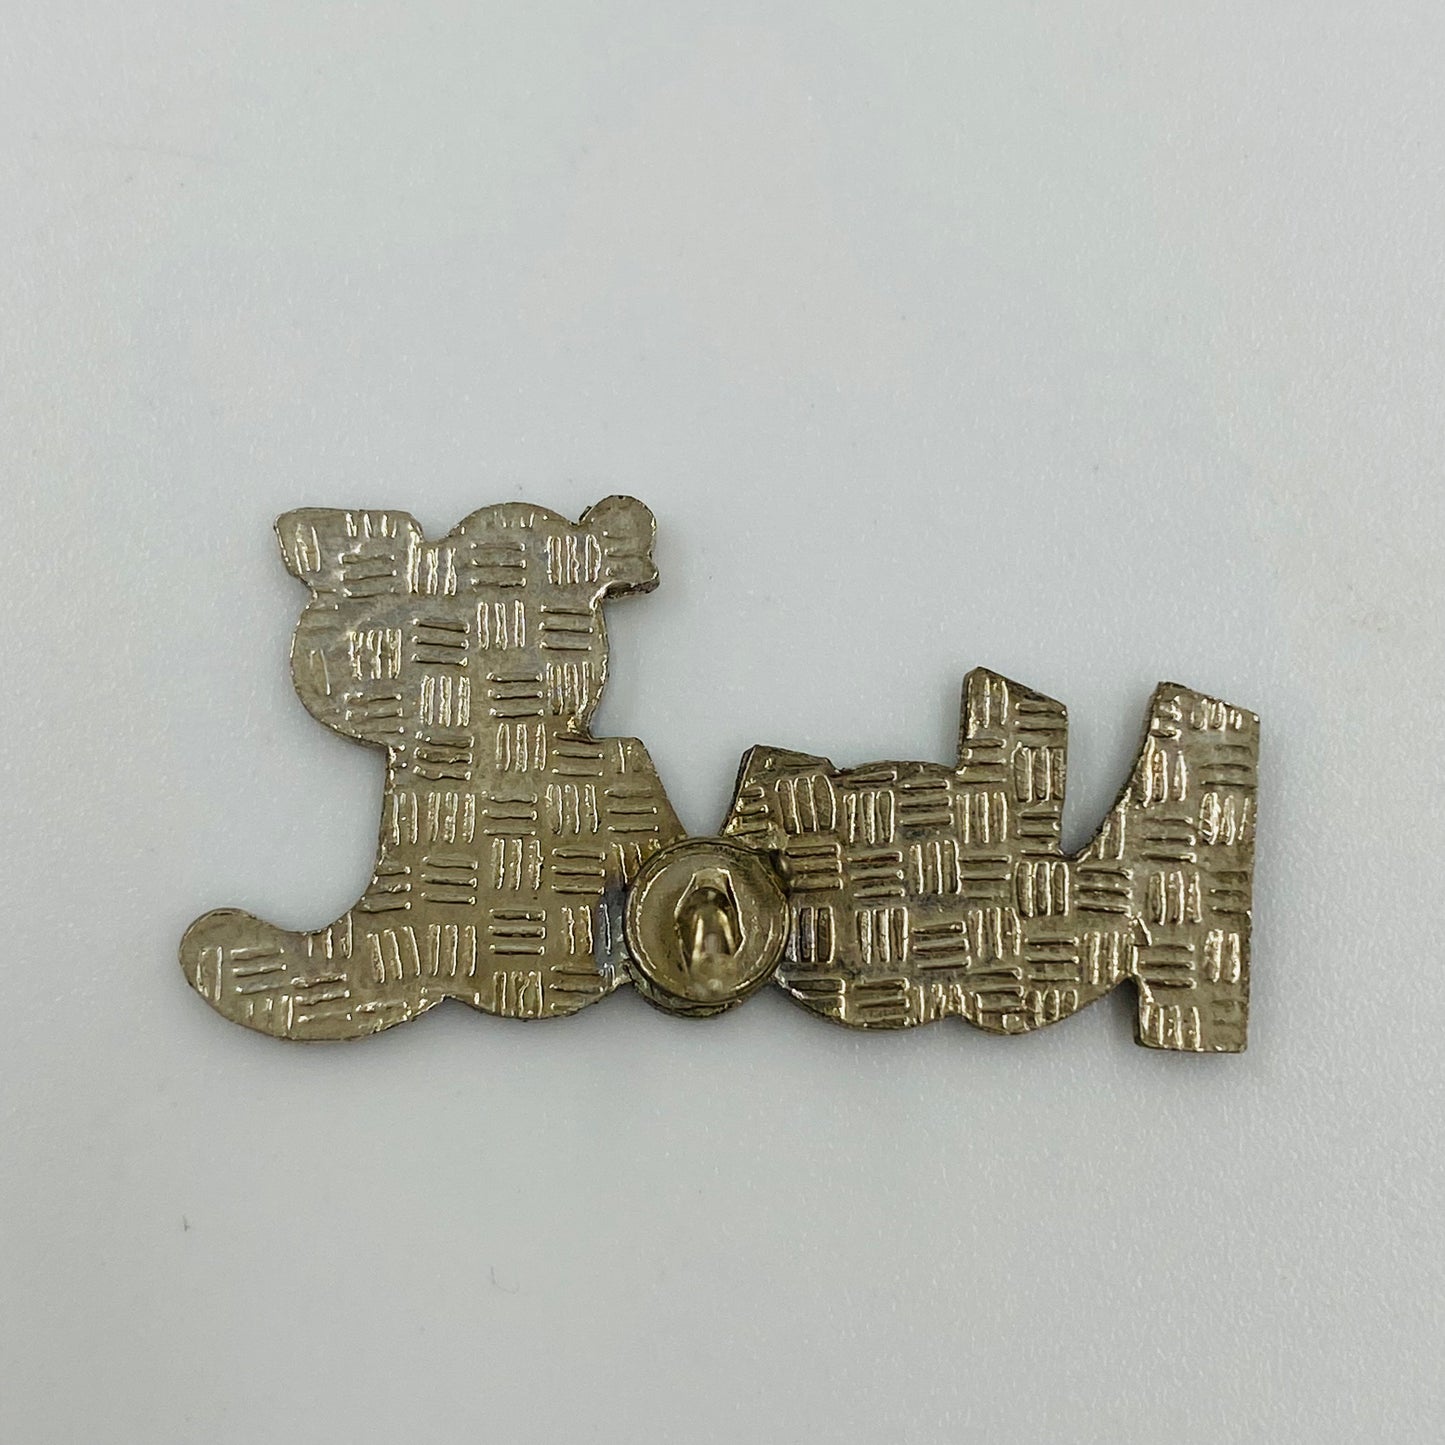 ’65 Chevy Nova pin